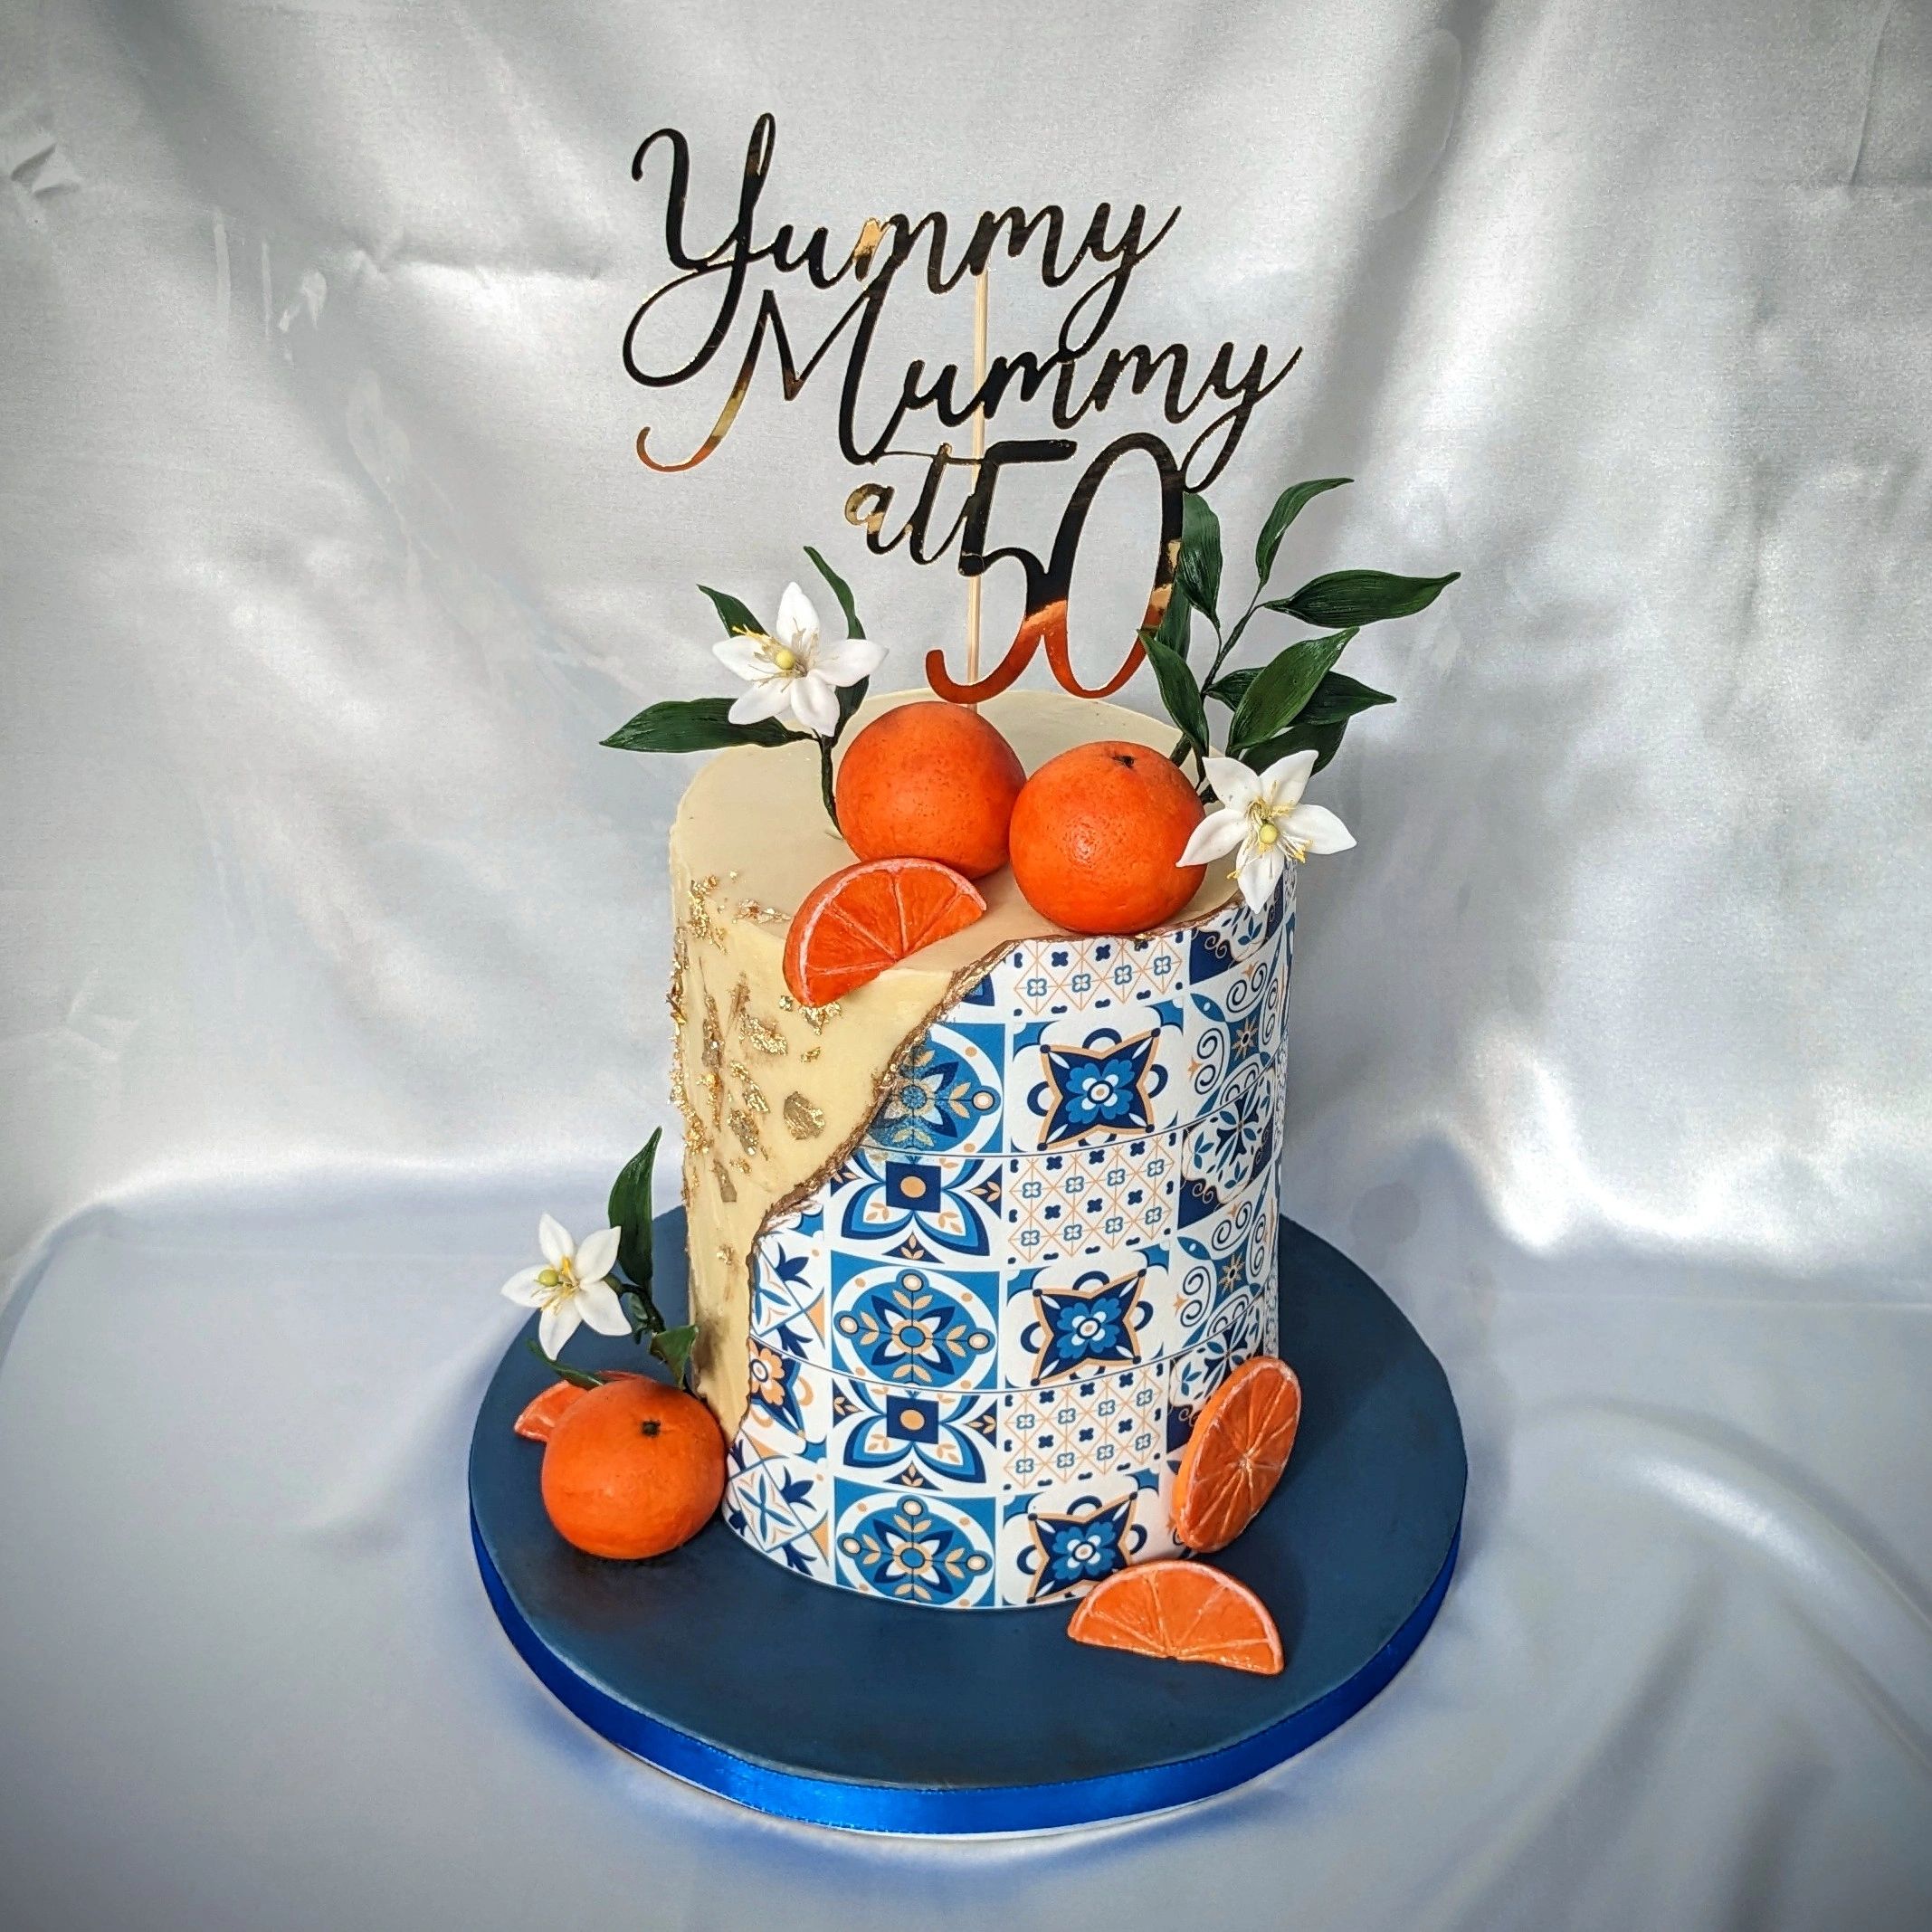 Yummy mummy 50th birthday cake with oranges, and Spanish vibes